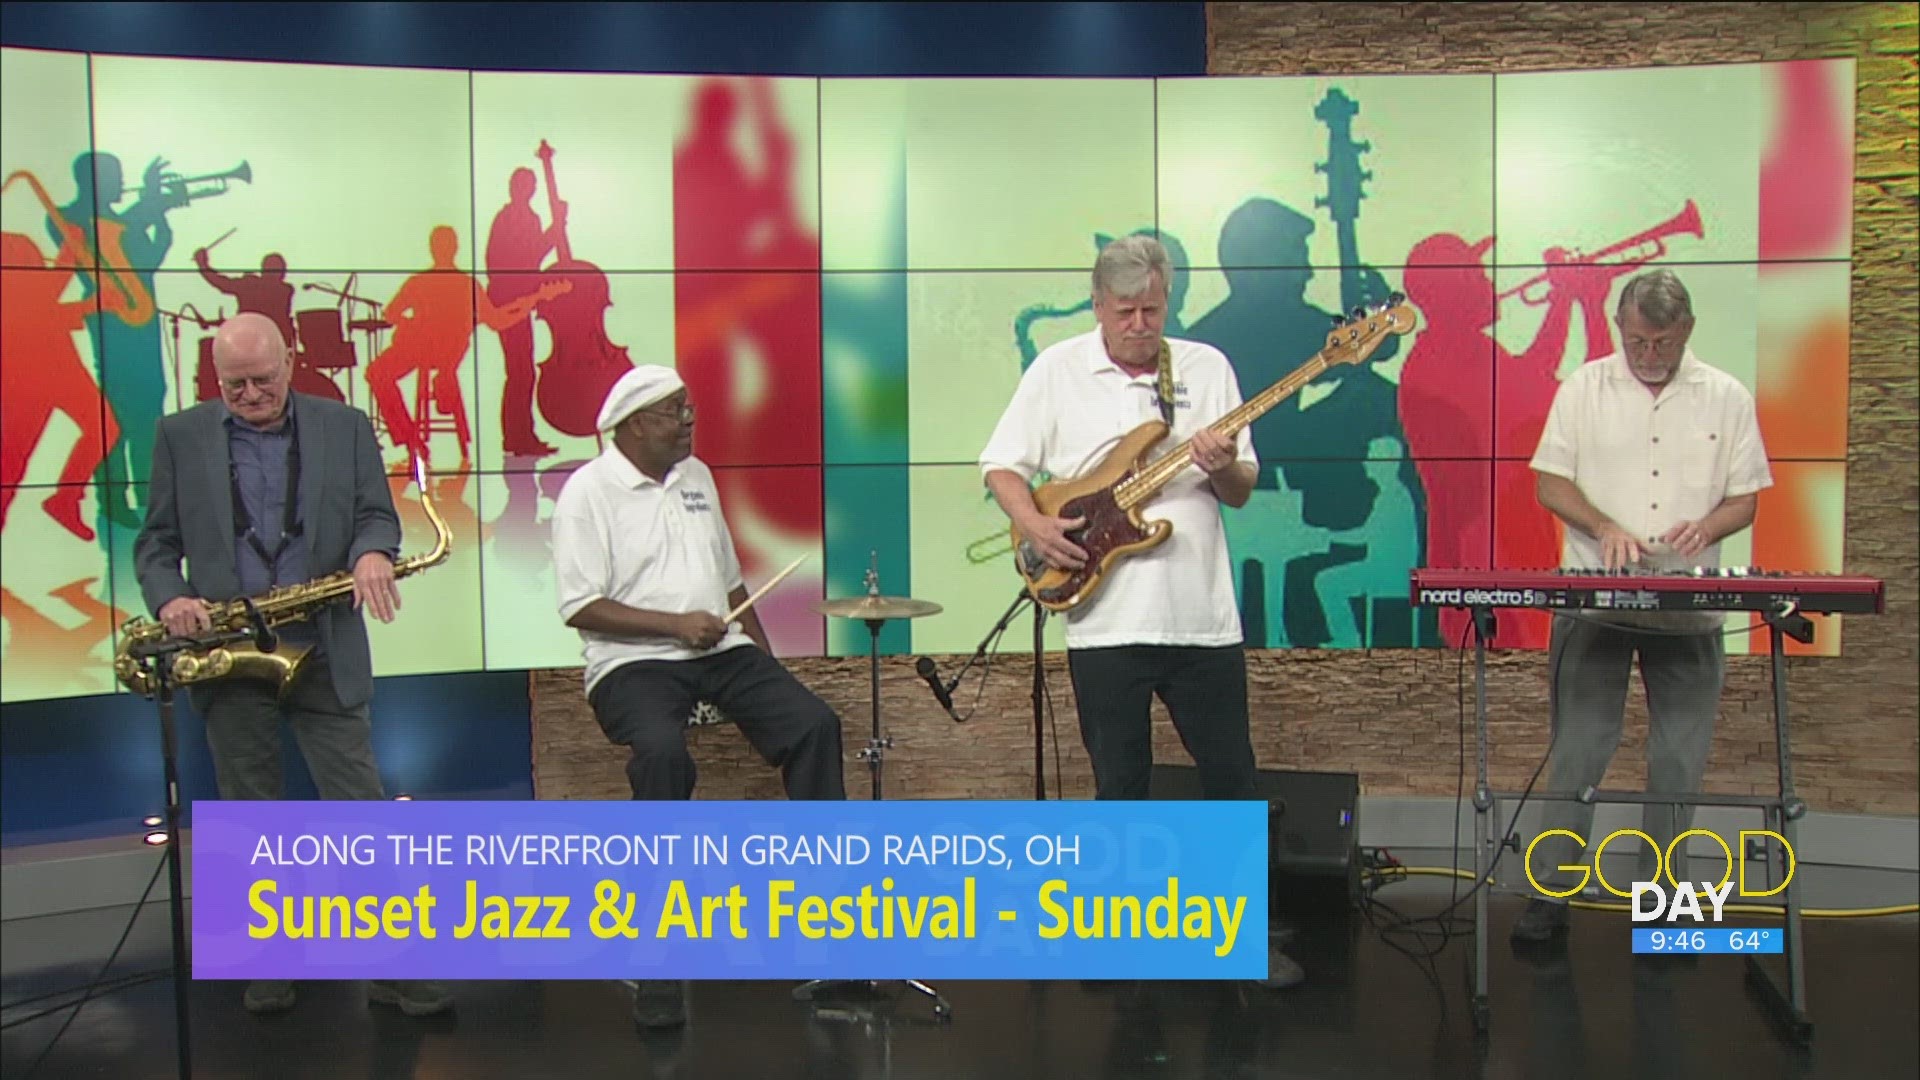 Sunset Jazz & Art Festival returns to Grand Rapids following rainout